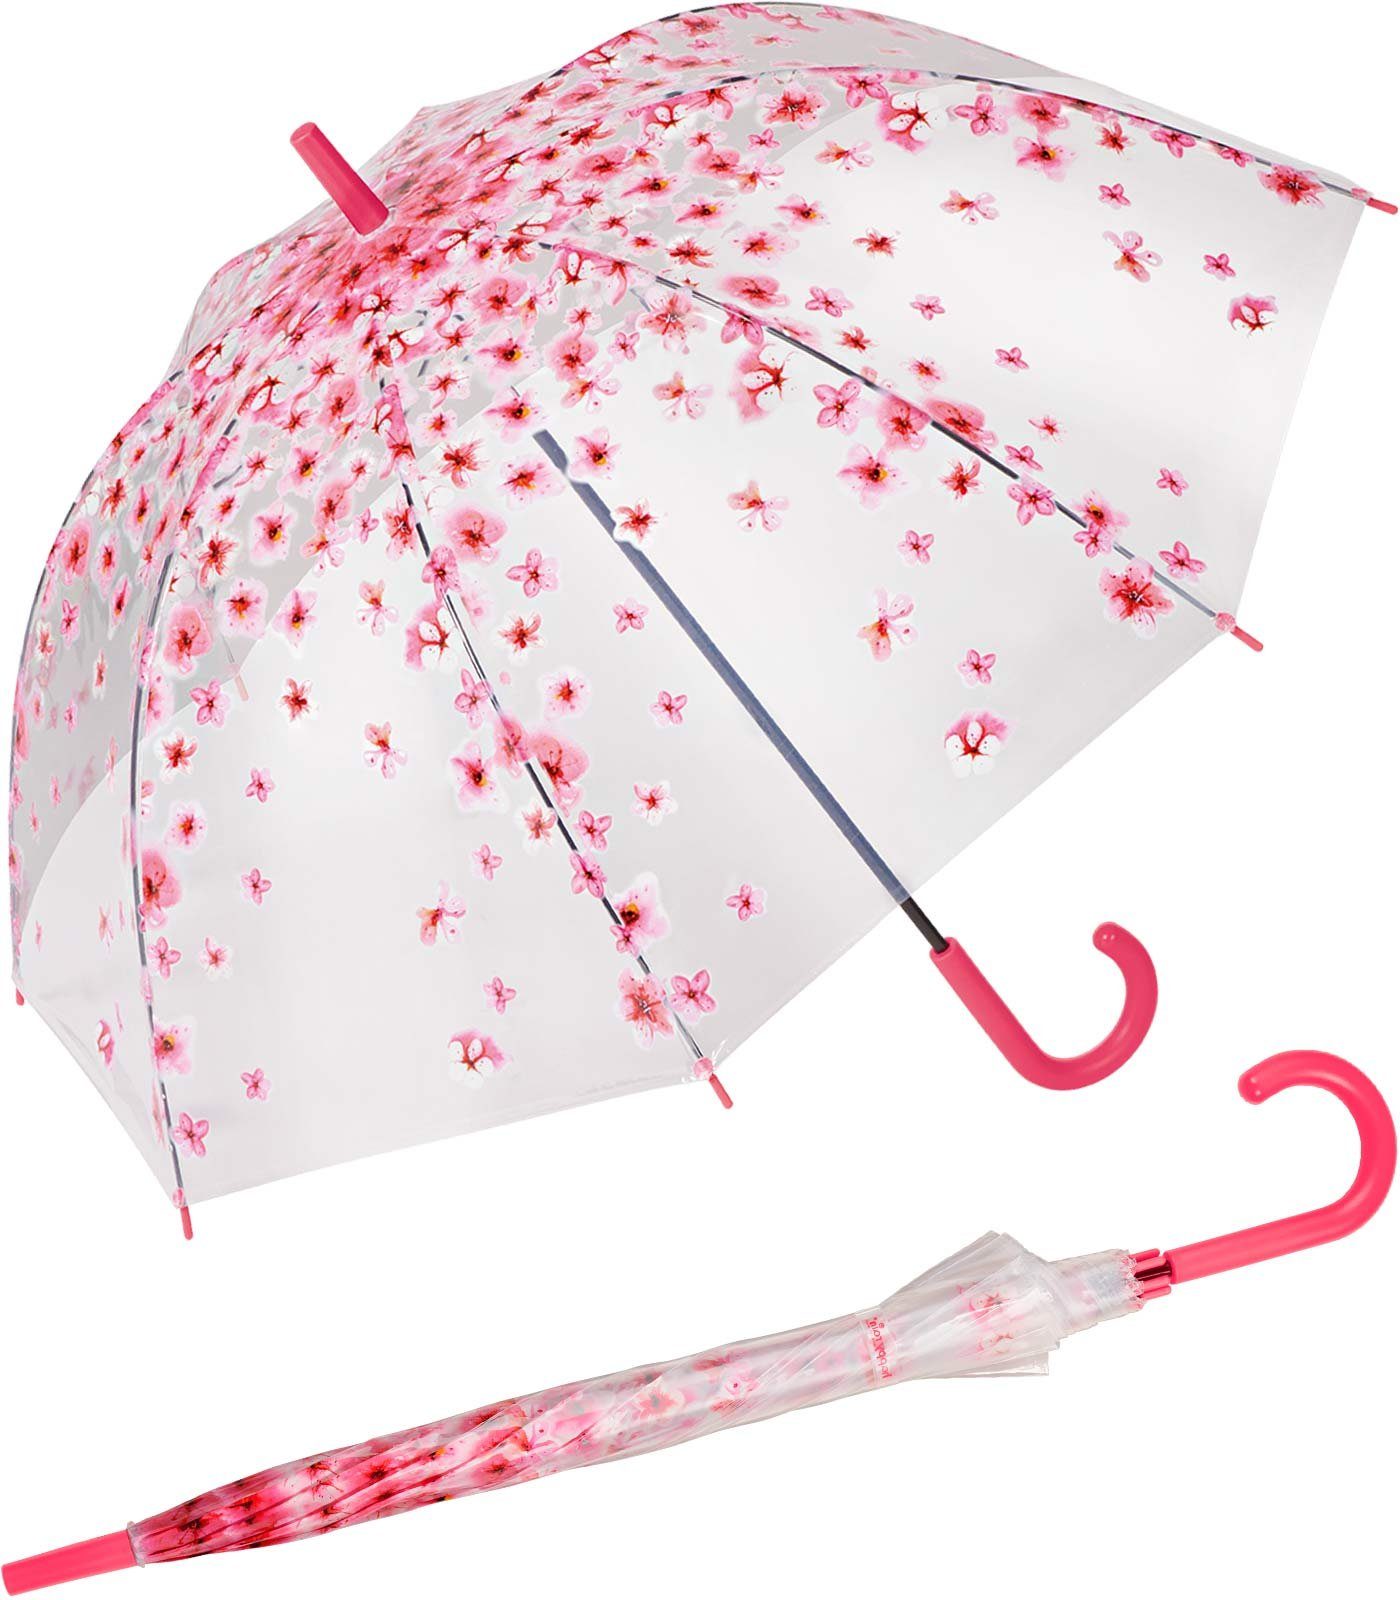 HAPPY RAIN Langregenschirm durchsichtiger, stabiler  Damen-Transparentschirm, bedruckt mit pinkfarbenen Blüten